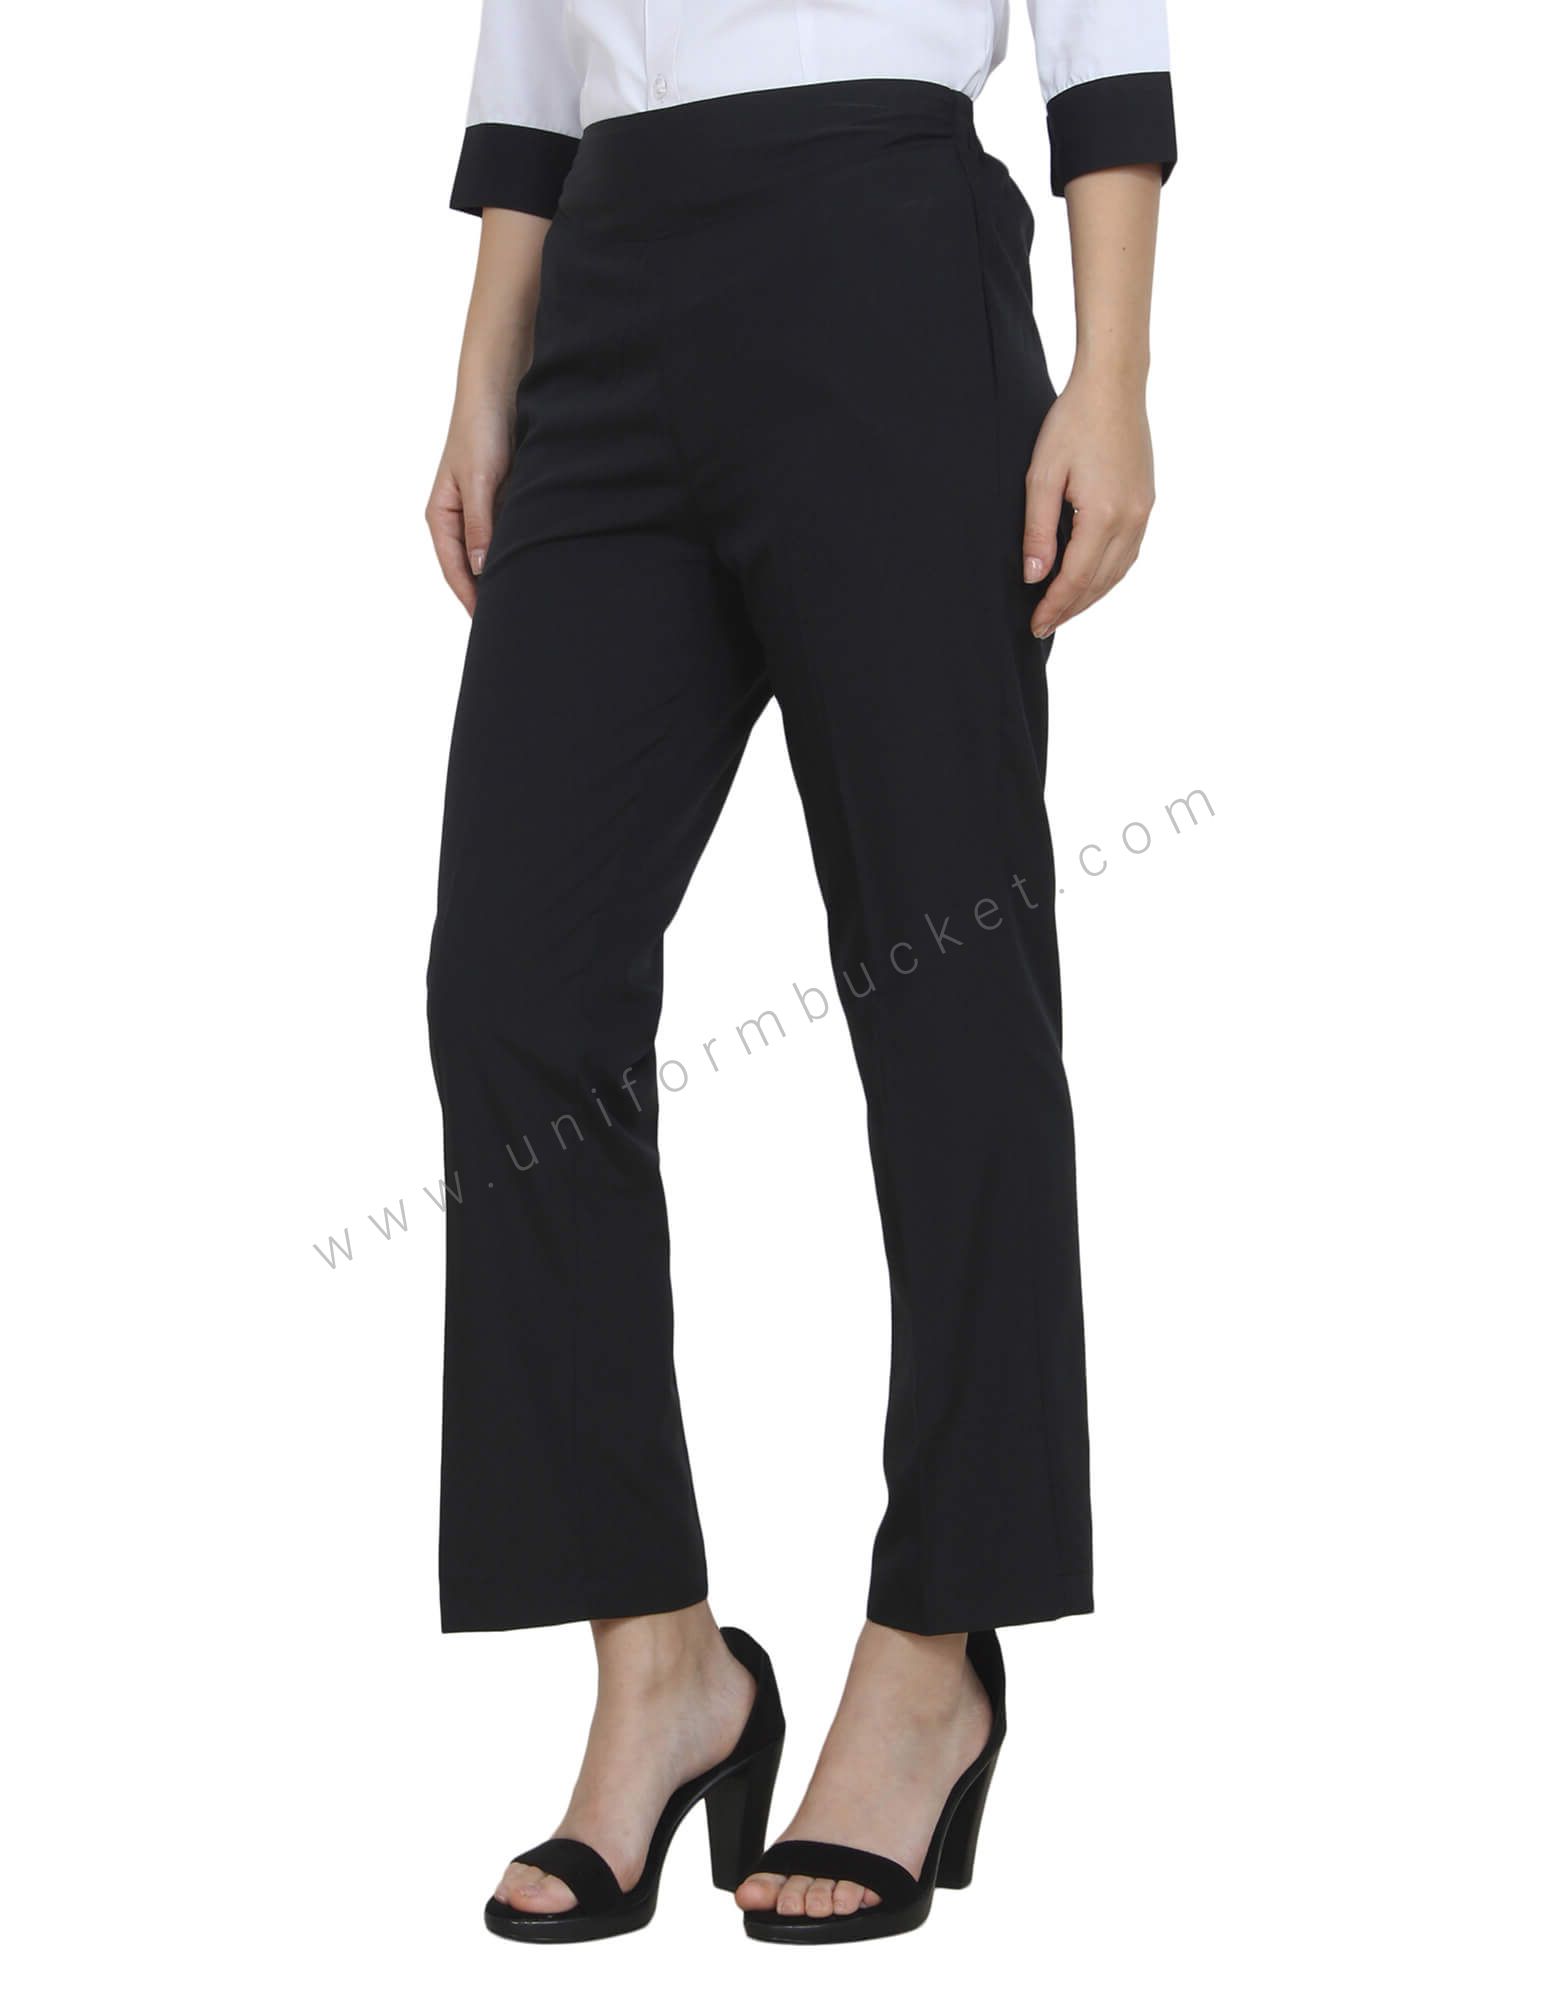 Black Gray Suit Pants Woman High Waist Pants Office Ladie Ashion Formal  Work Trousers Female Elegant Casual Straight Pants